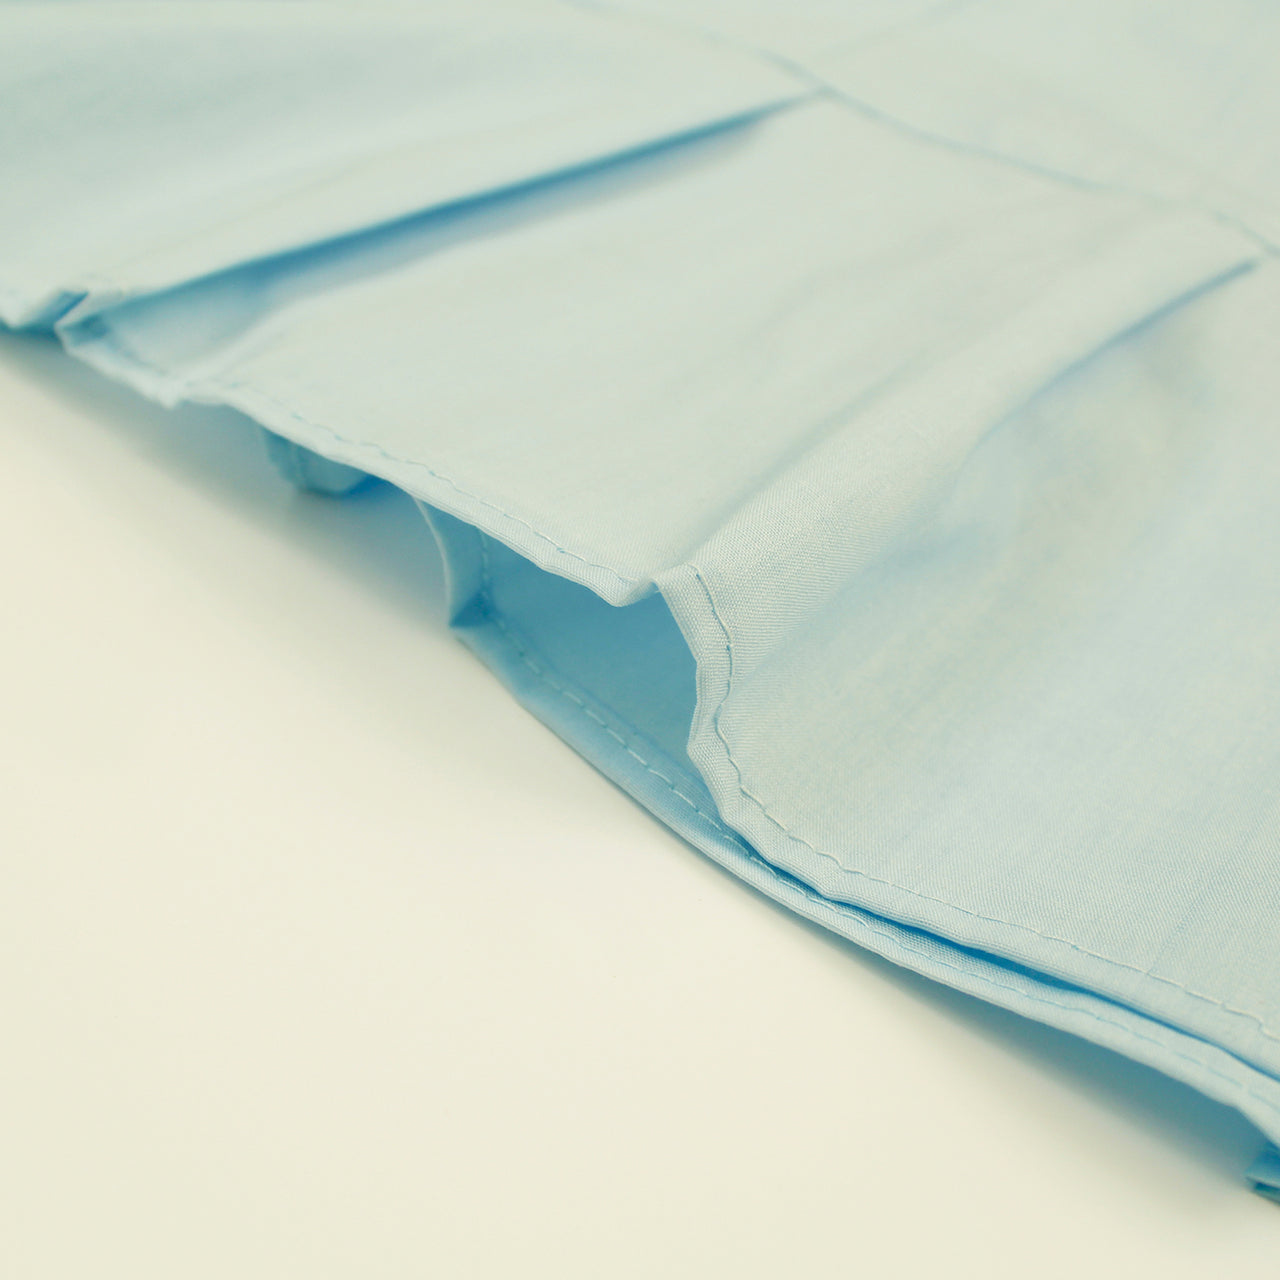 Sky Blue - Sari (Saree) Petticoat - Available in S, M, L & XL - Underskirts For Sari's